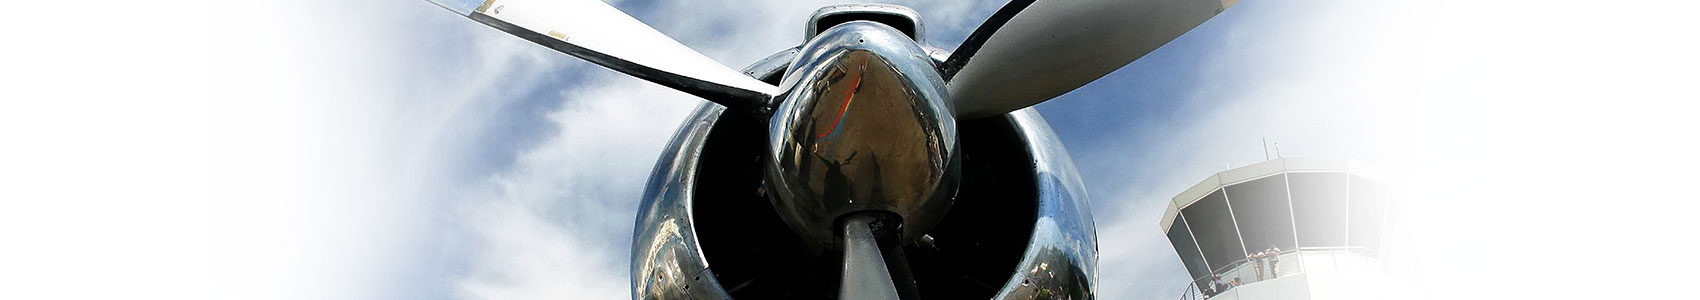 propeller maintenance tips